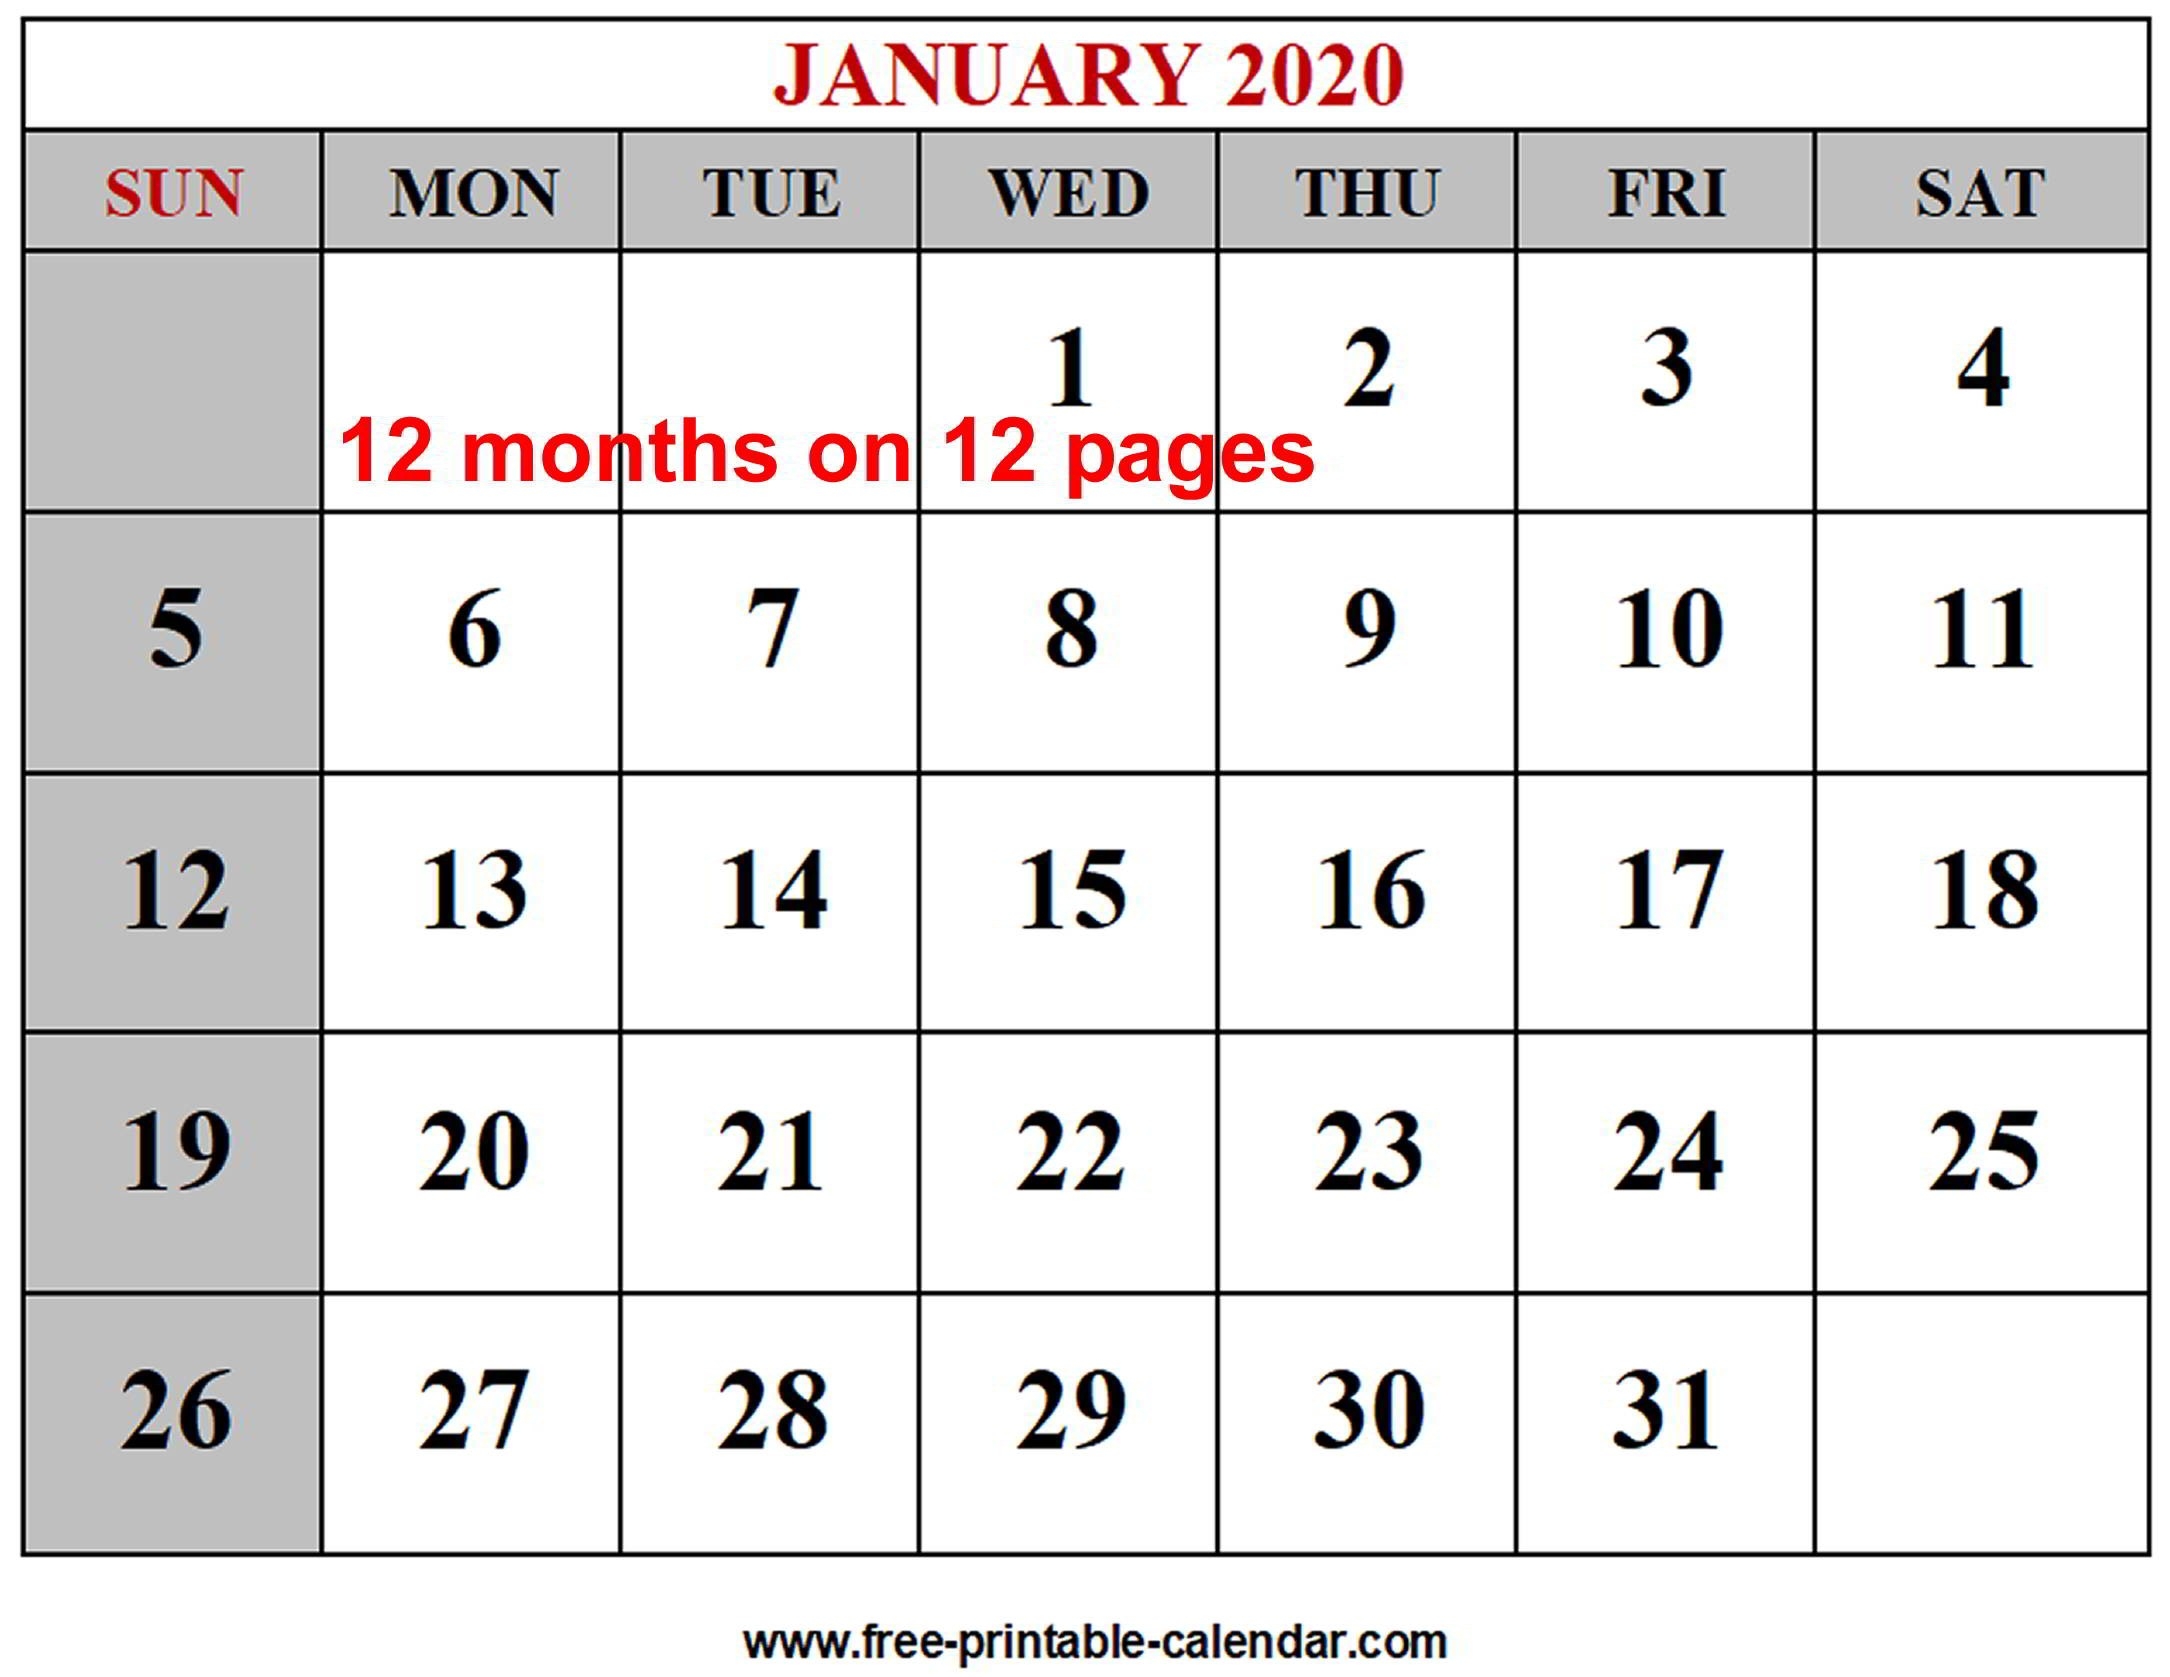 Year 2020 Calendar Templates - Free-Printable-Calendar-Free 2 Page Monthly Calendar 2020